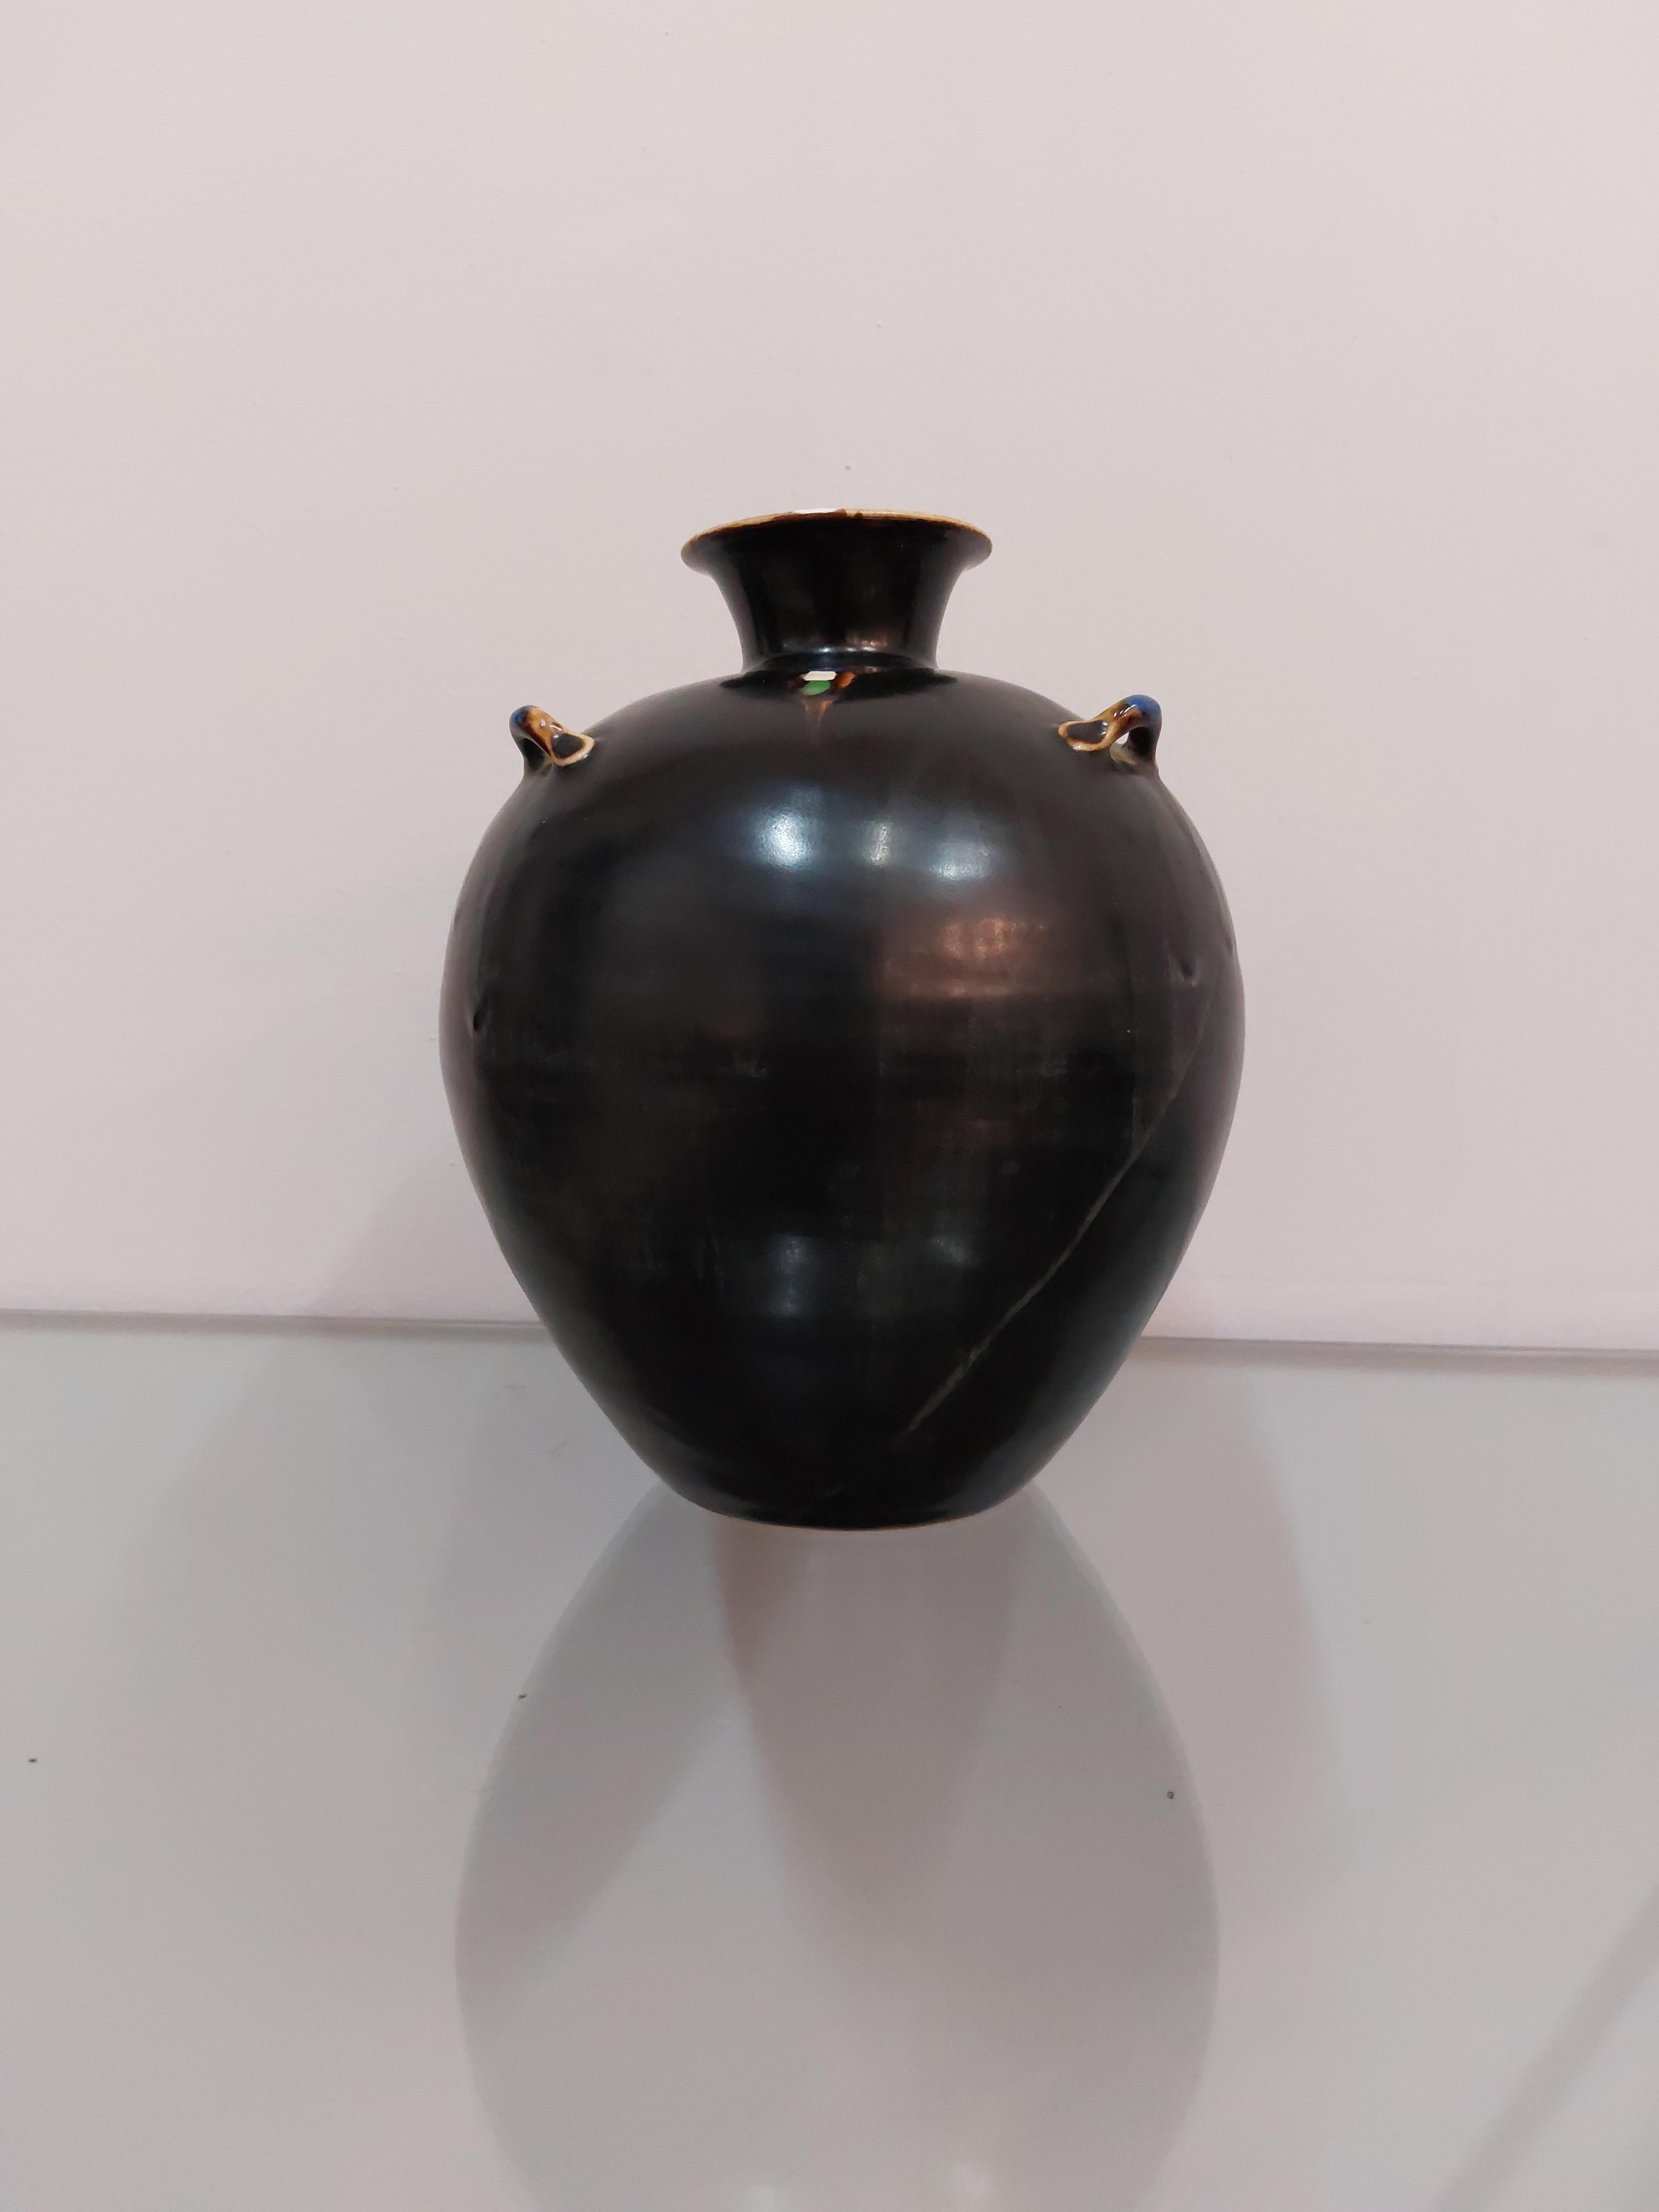 Decorative Object Ceramic Vase Enameled Black Midcentury Italian Design 1950s For Sale 2